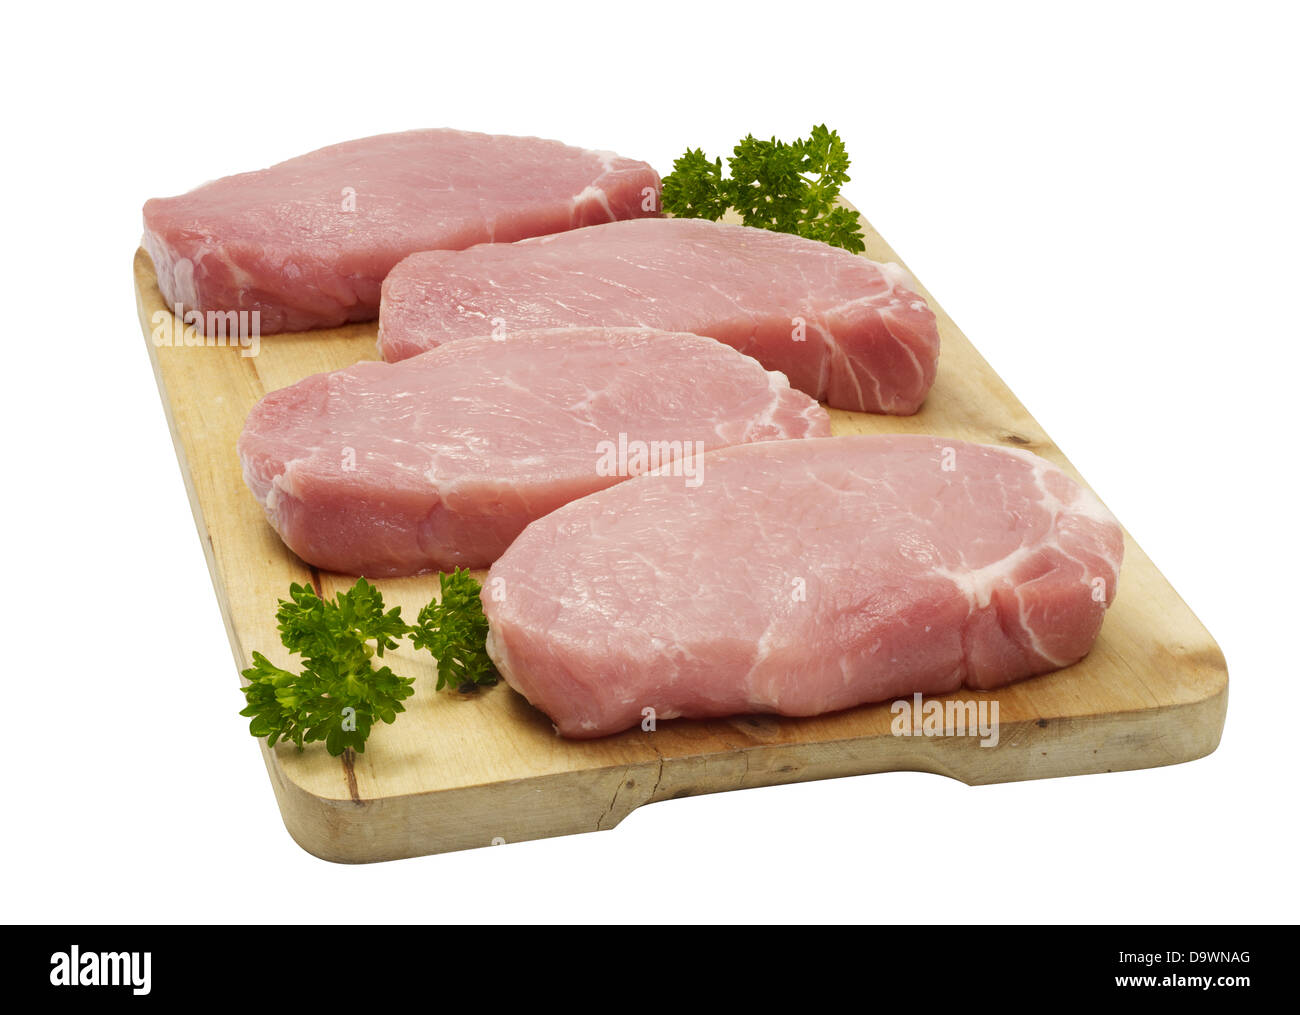 raw pork loin chop boneless Stock Photo